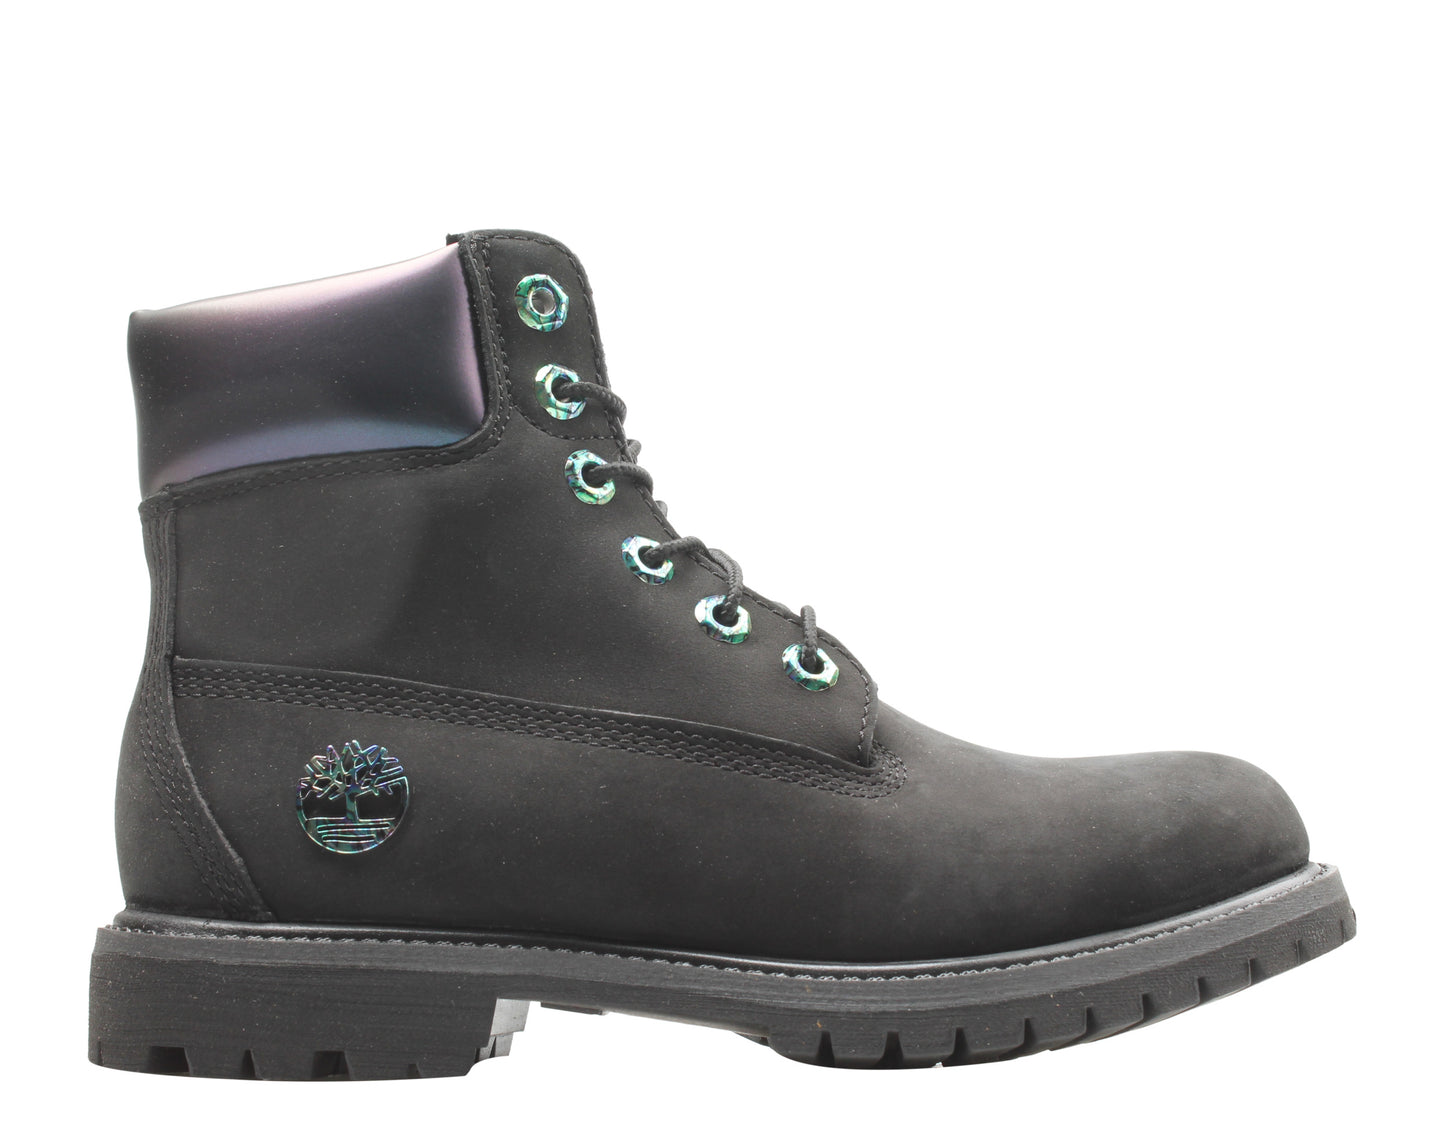 Timberland 6-Inch Premium Waterproof Black/Iridescent Women's Boots A21Y1